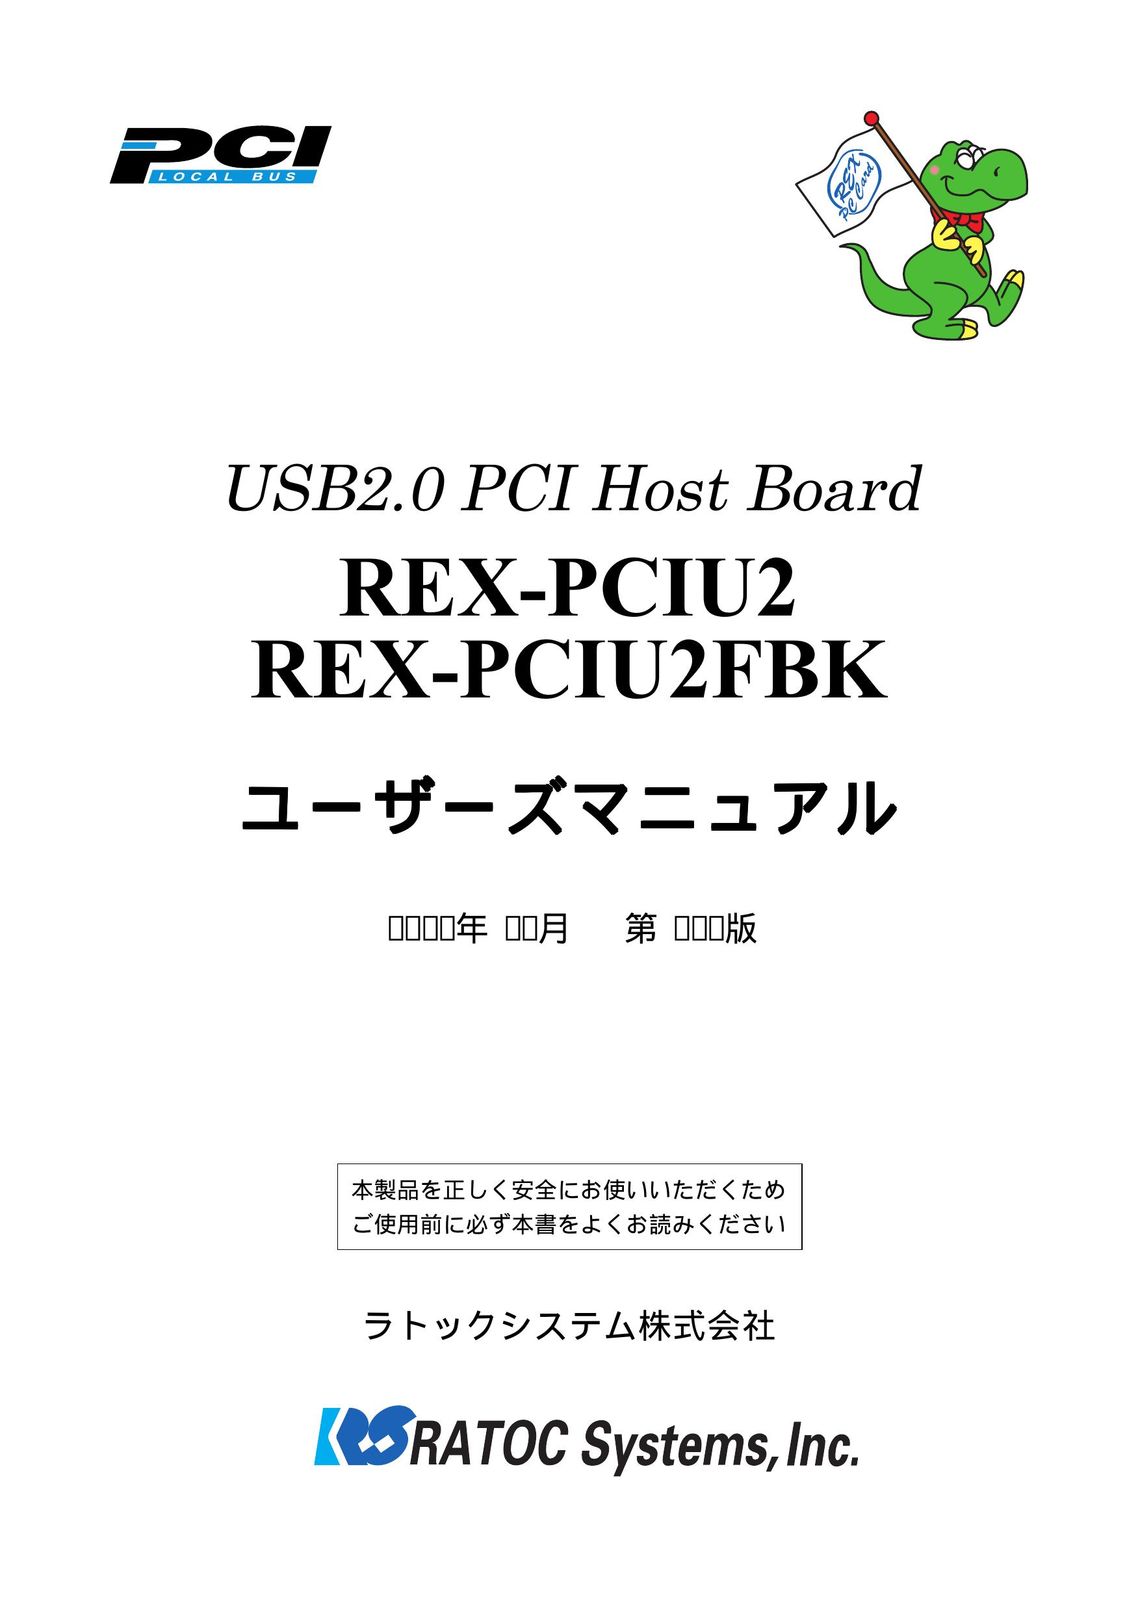 Ratoc Systems REX-PCIU2FBK Network Card User Manual